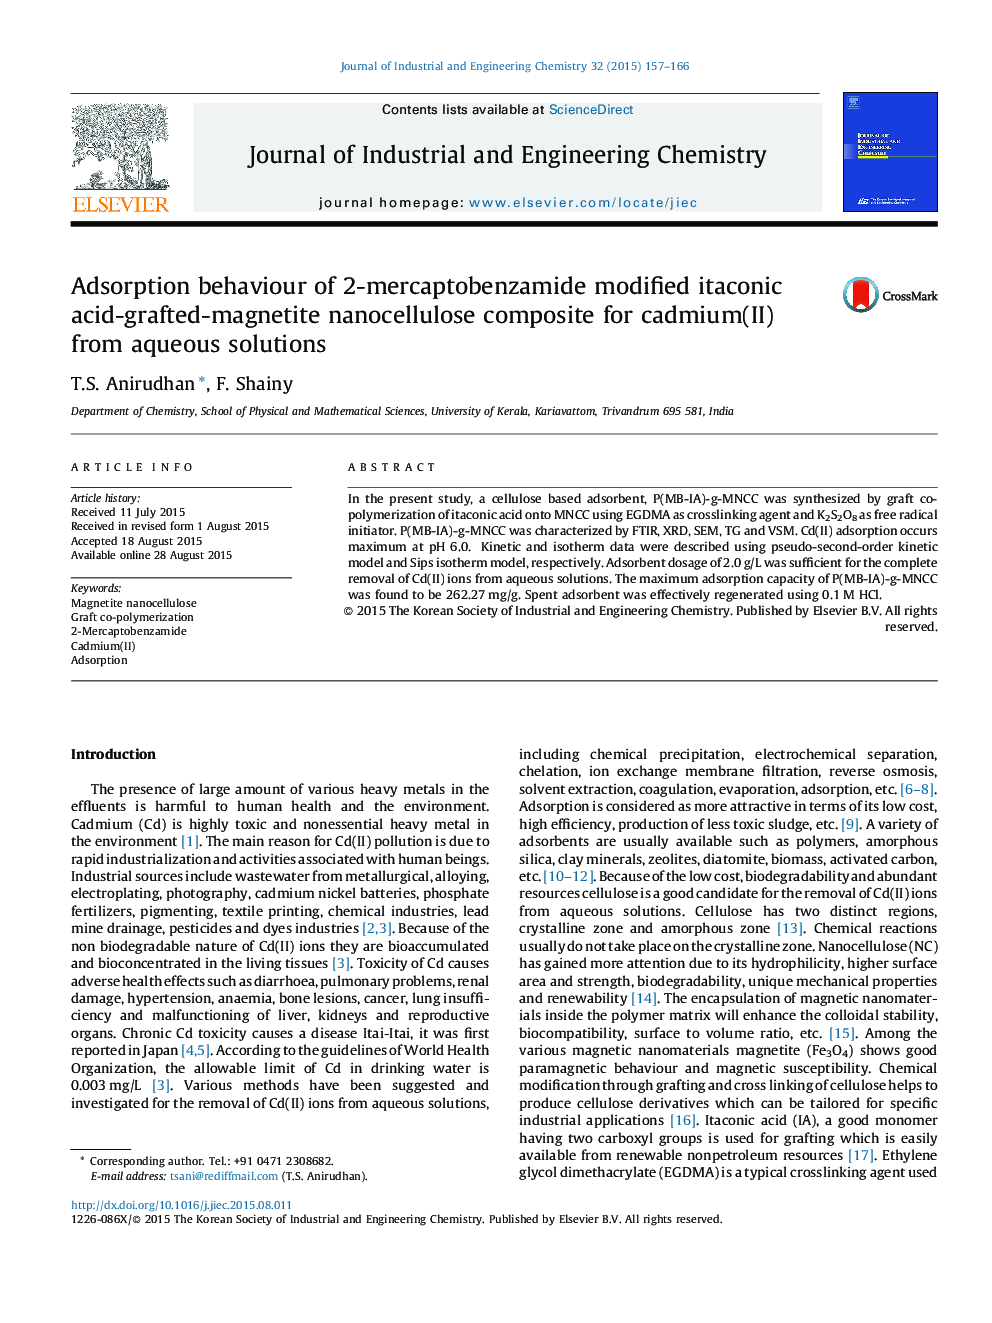 Adsorption behaviour of 2-mercaptobenzamide modified itaconic acid-grafted-magnetite nanocellulose composite for cadmium(II) from aqueous solutions